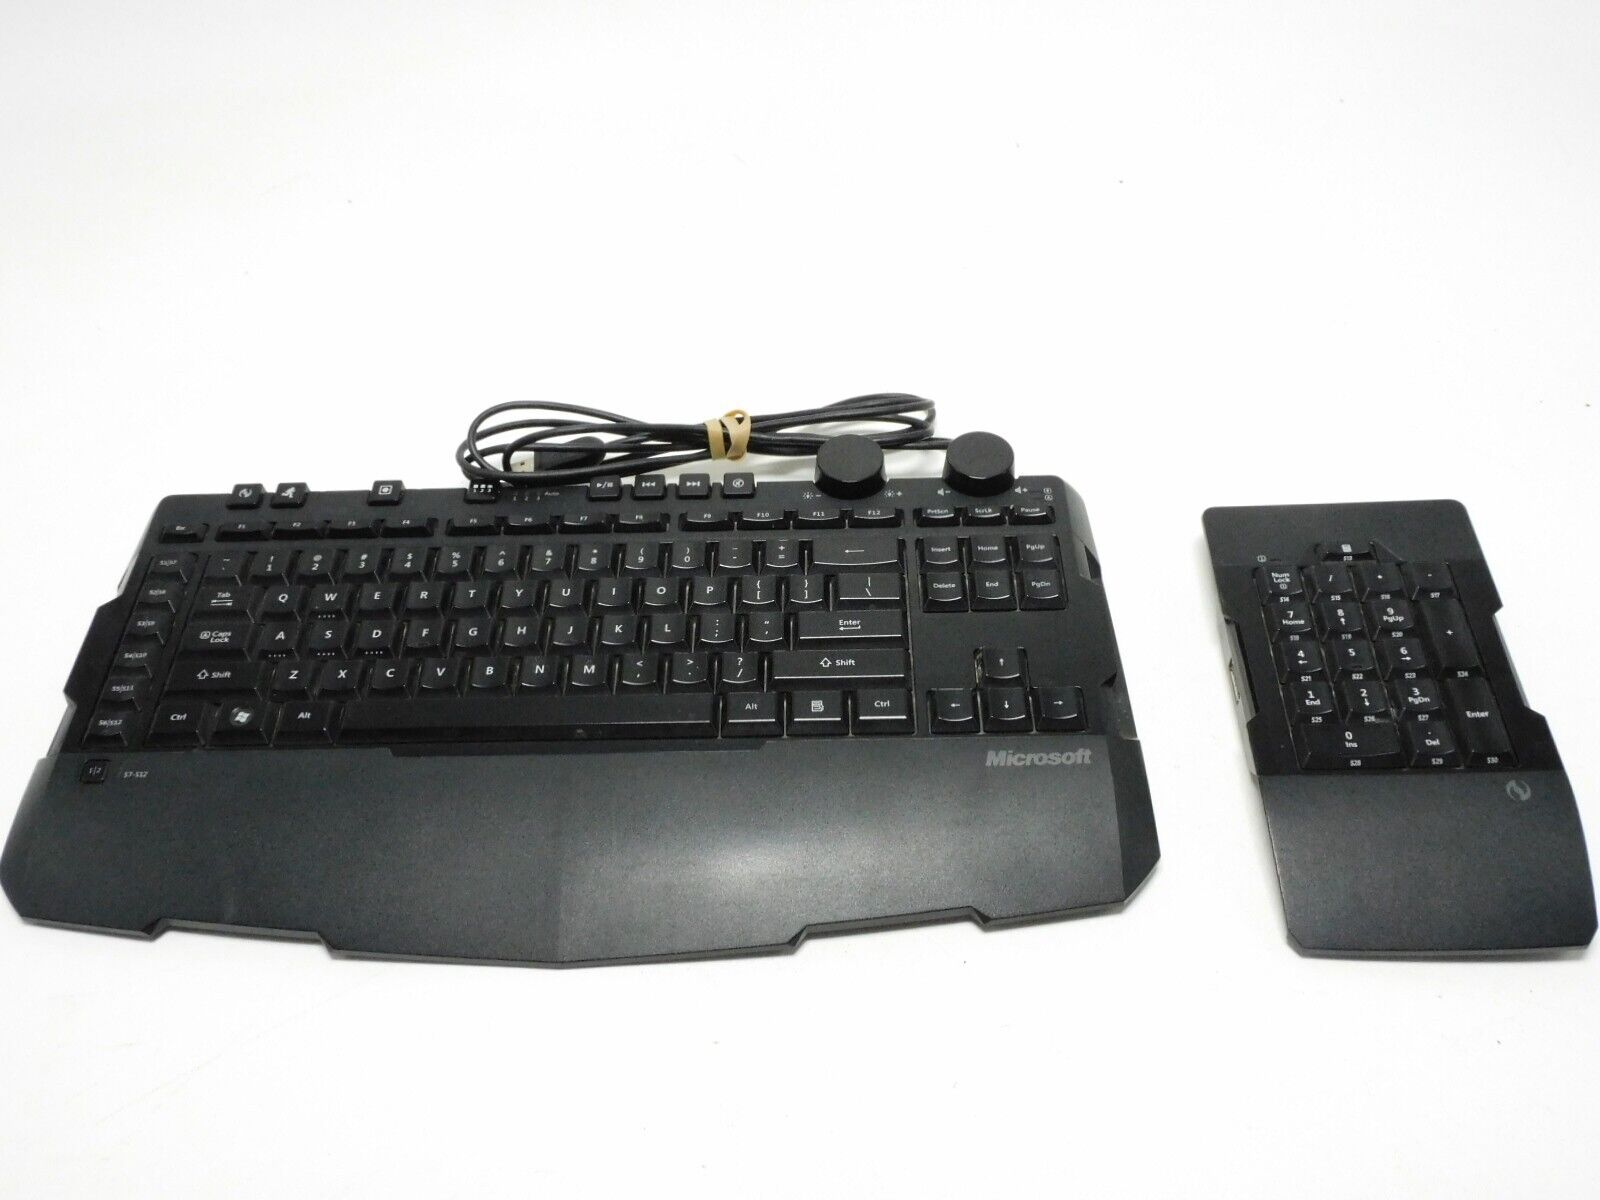 Microsoft Sidewinder X6 Keyboard 1361 KU0753 with Number Pad